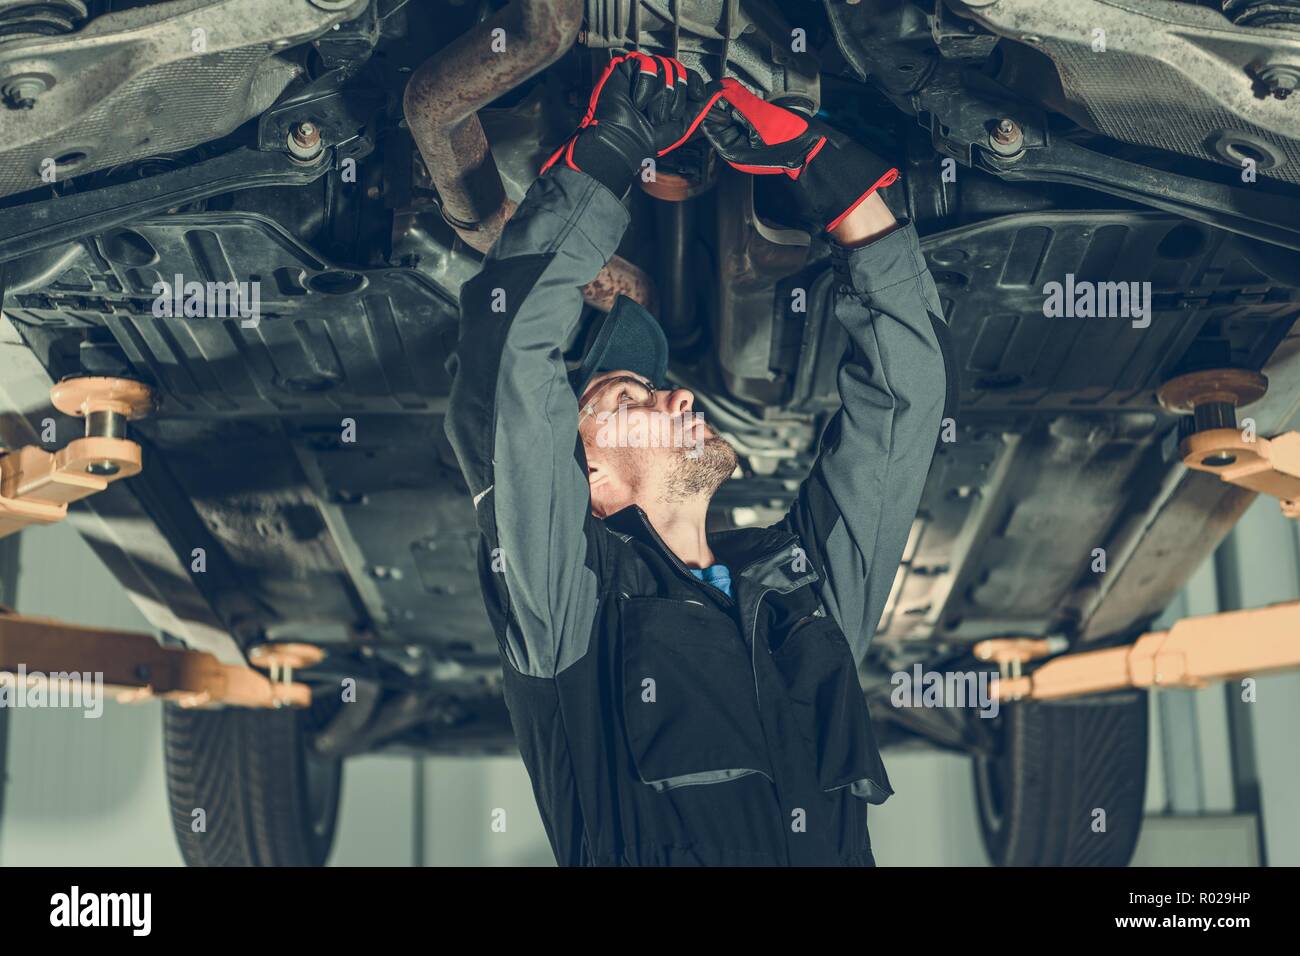 Car Mechanic Undercarriage Maintenance. Caucasian Worker Adjusting Tension on a Vehicle Drivetrain Elements. Stock Photo